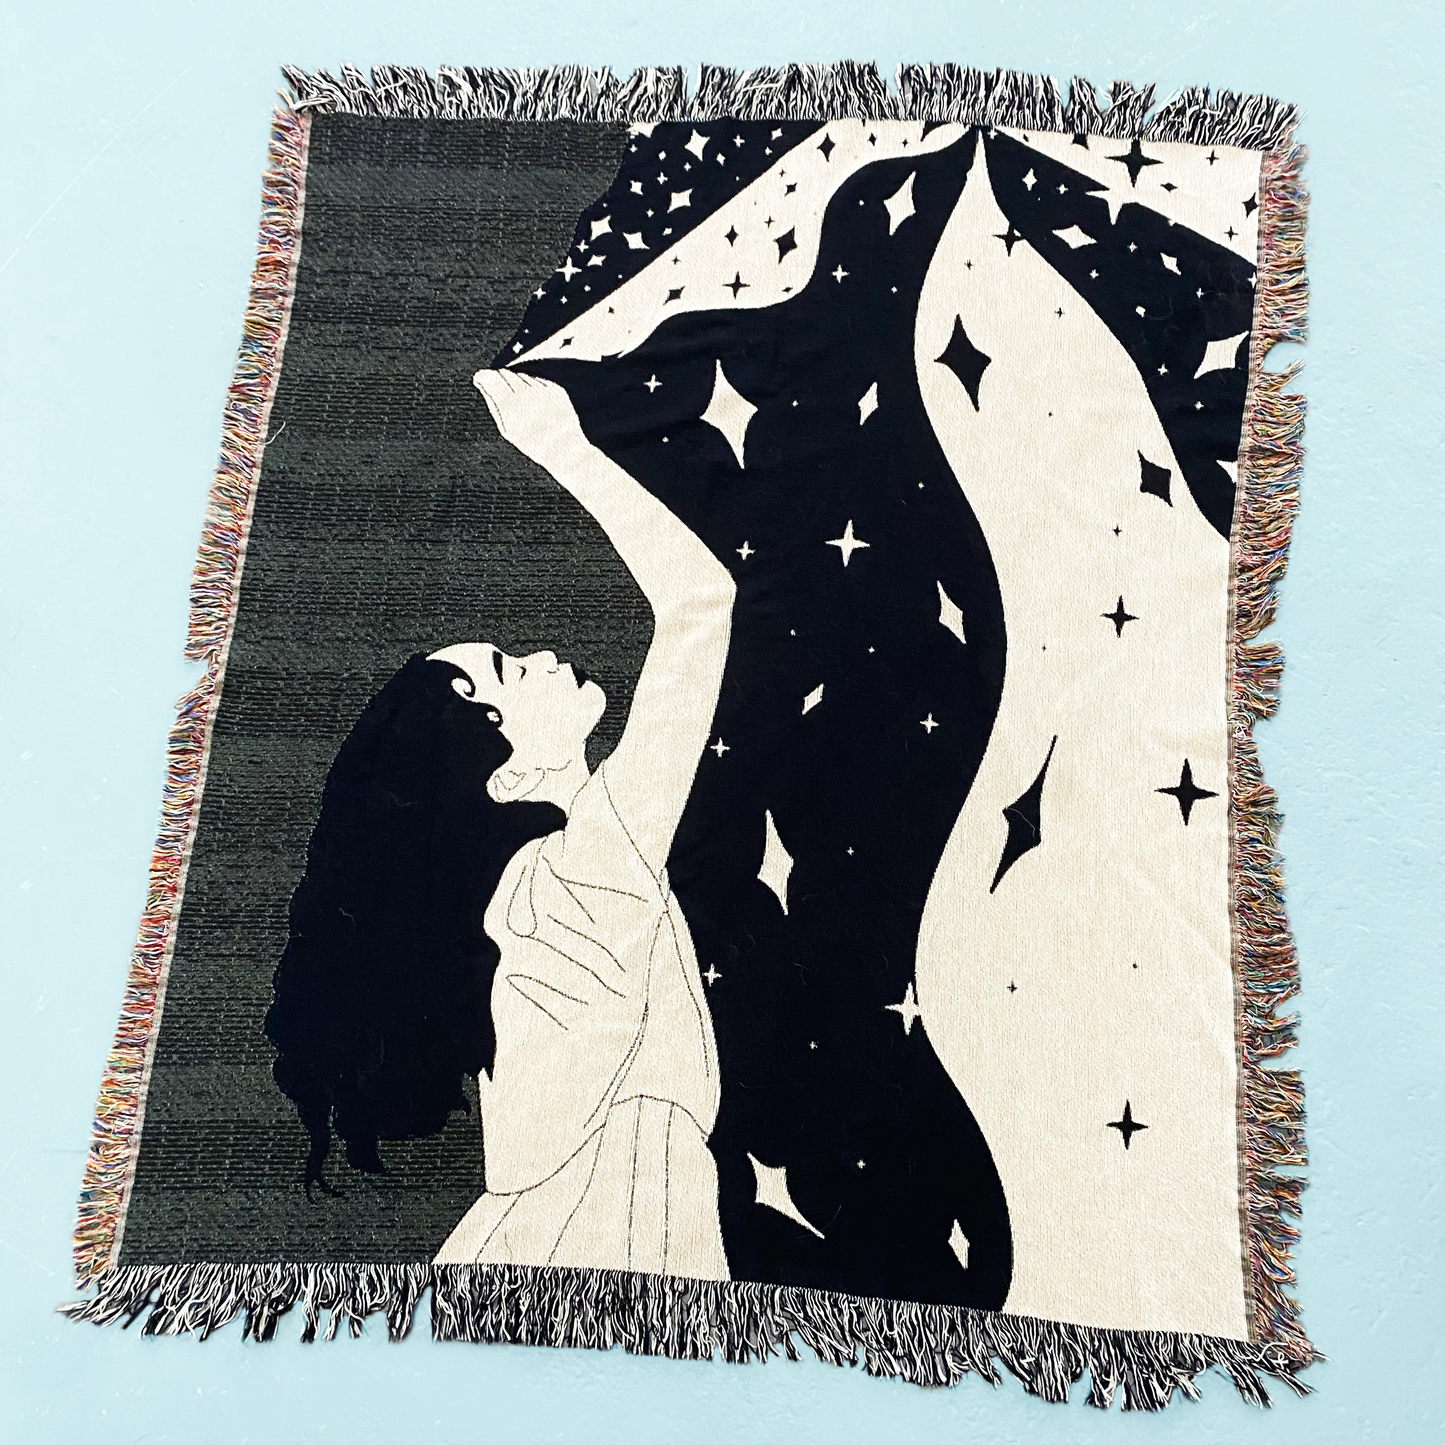 The Star Woven Blanket